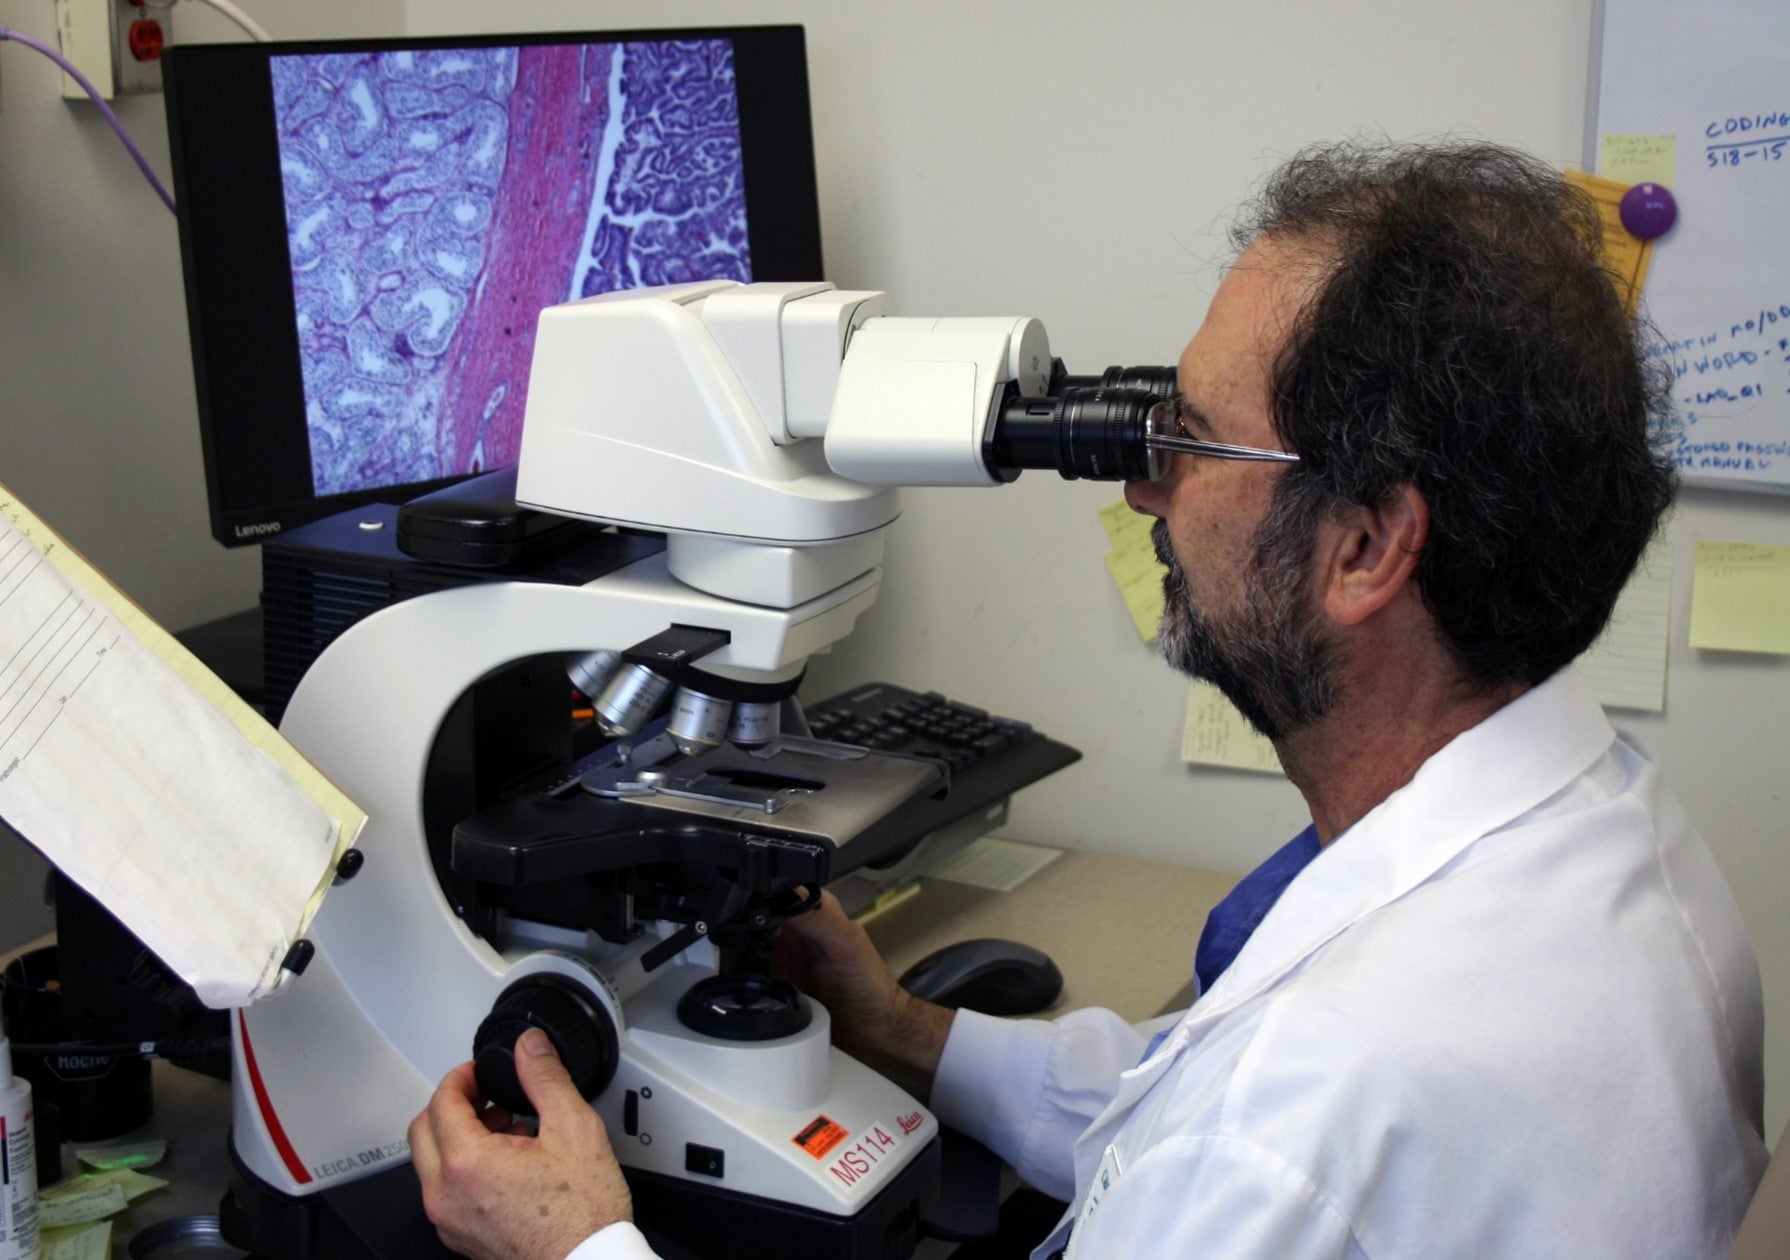 Dr. Adrian Batten, examines pathology slides under a microscope